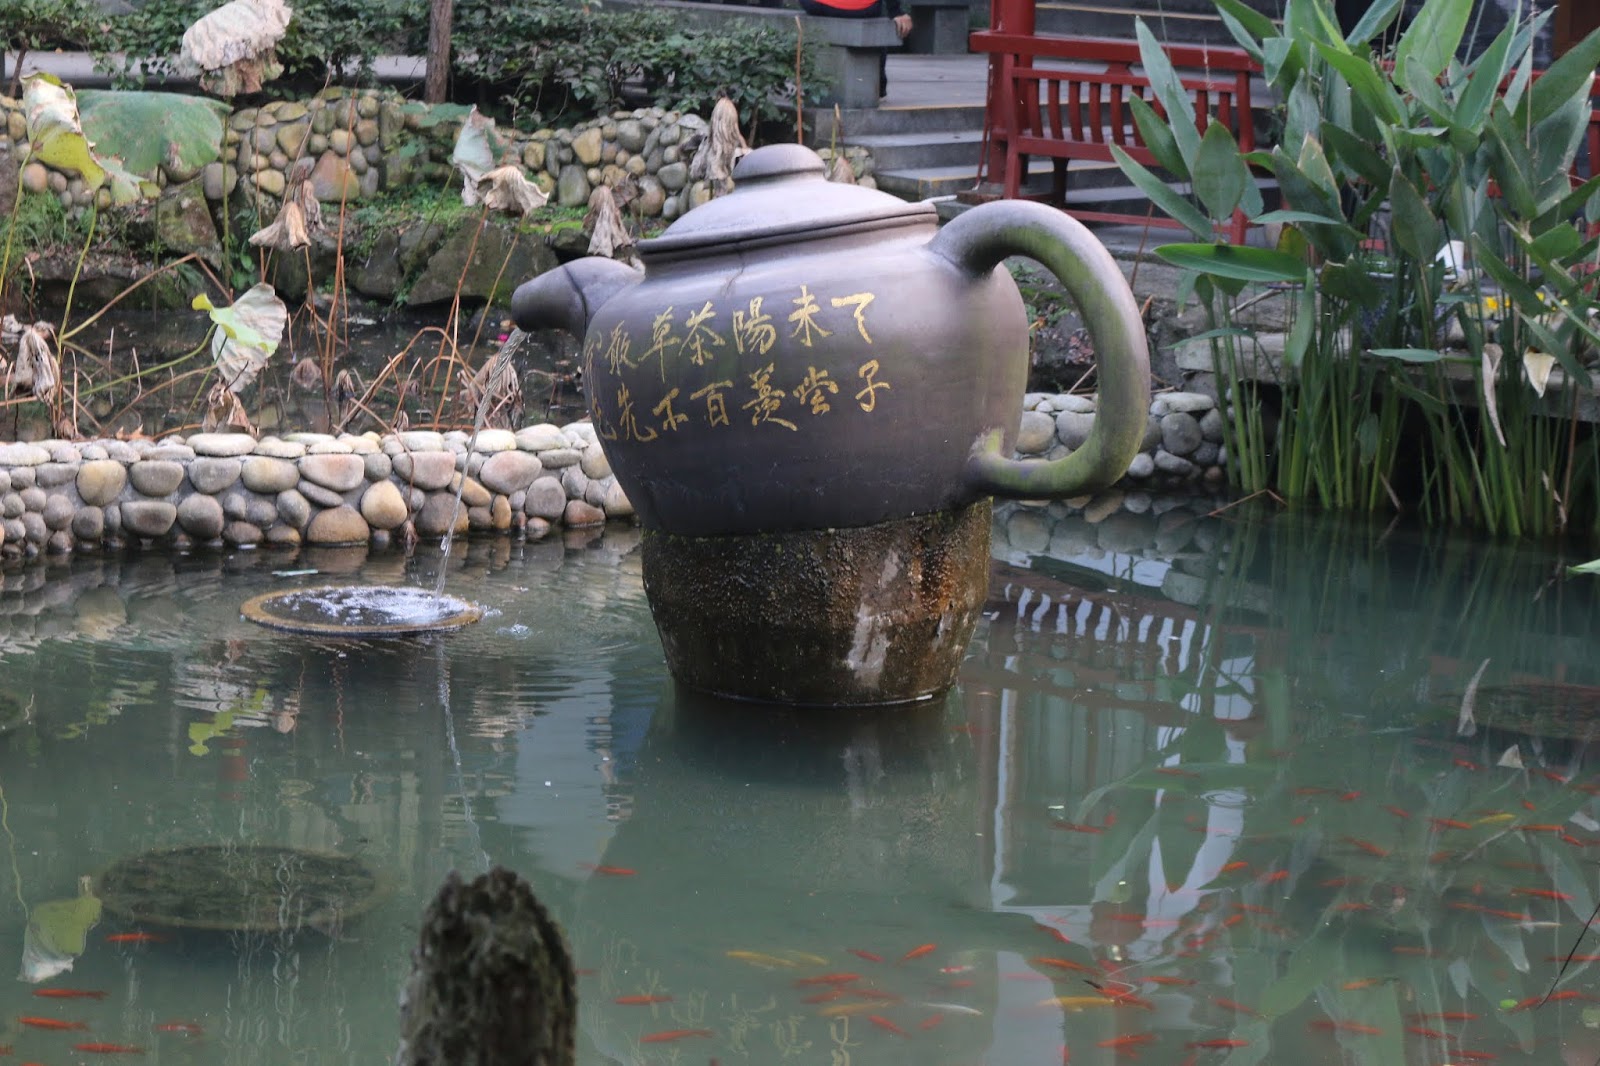 Dragon Well Green Tea Plantation Hangzhou